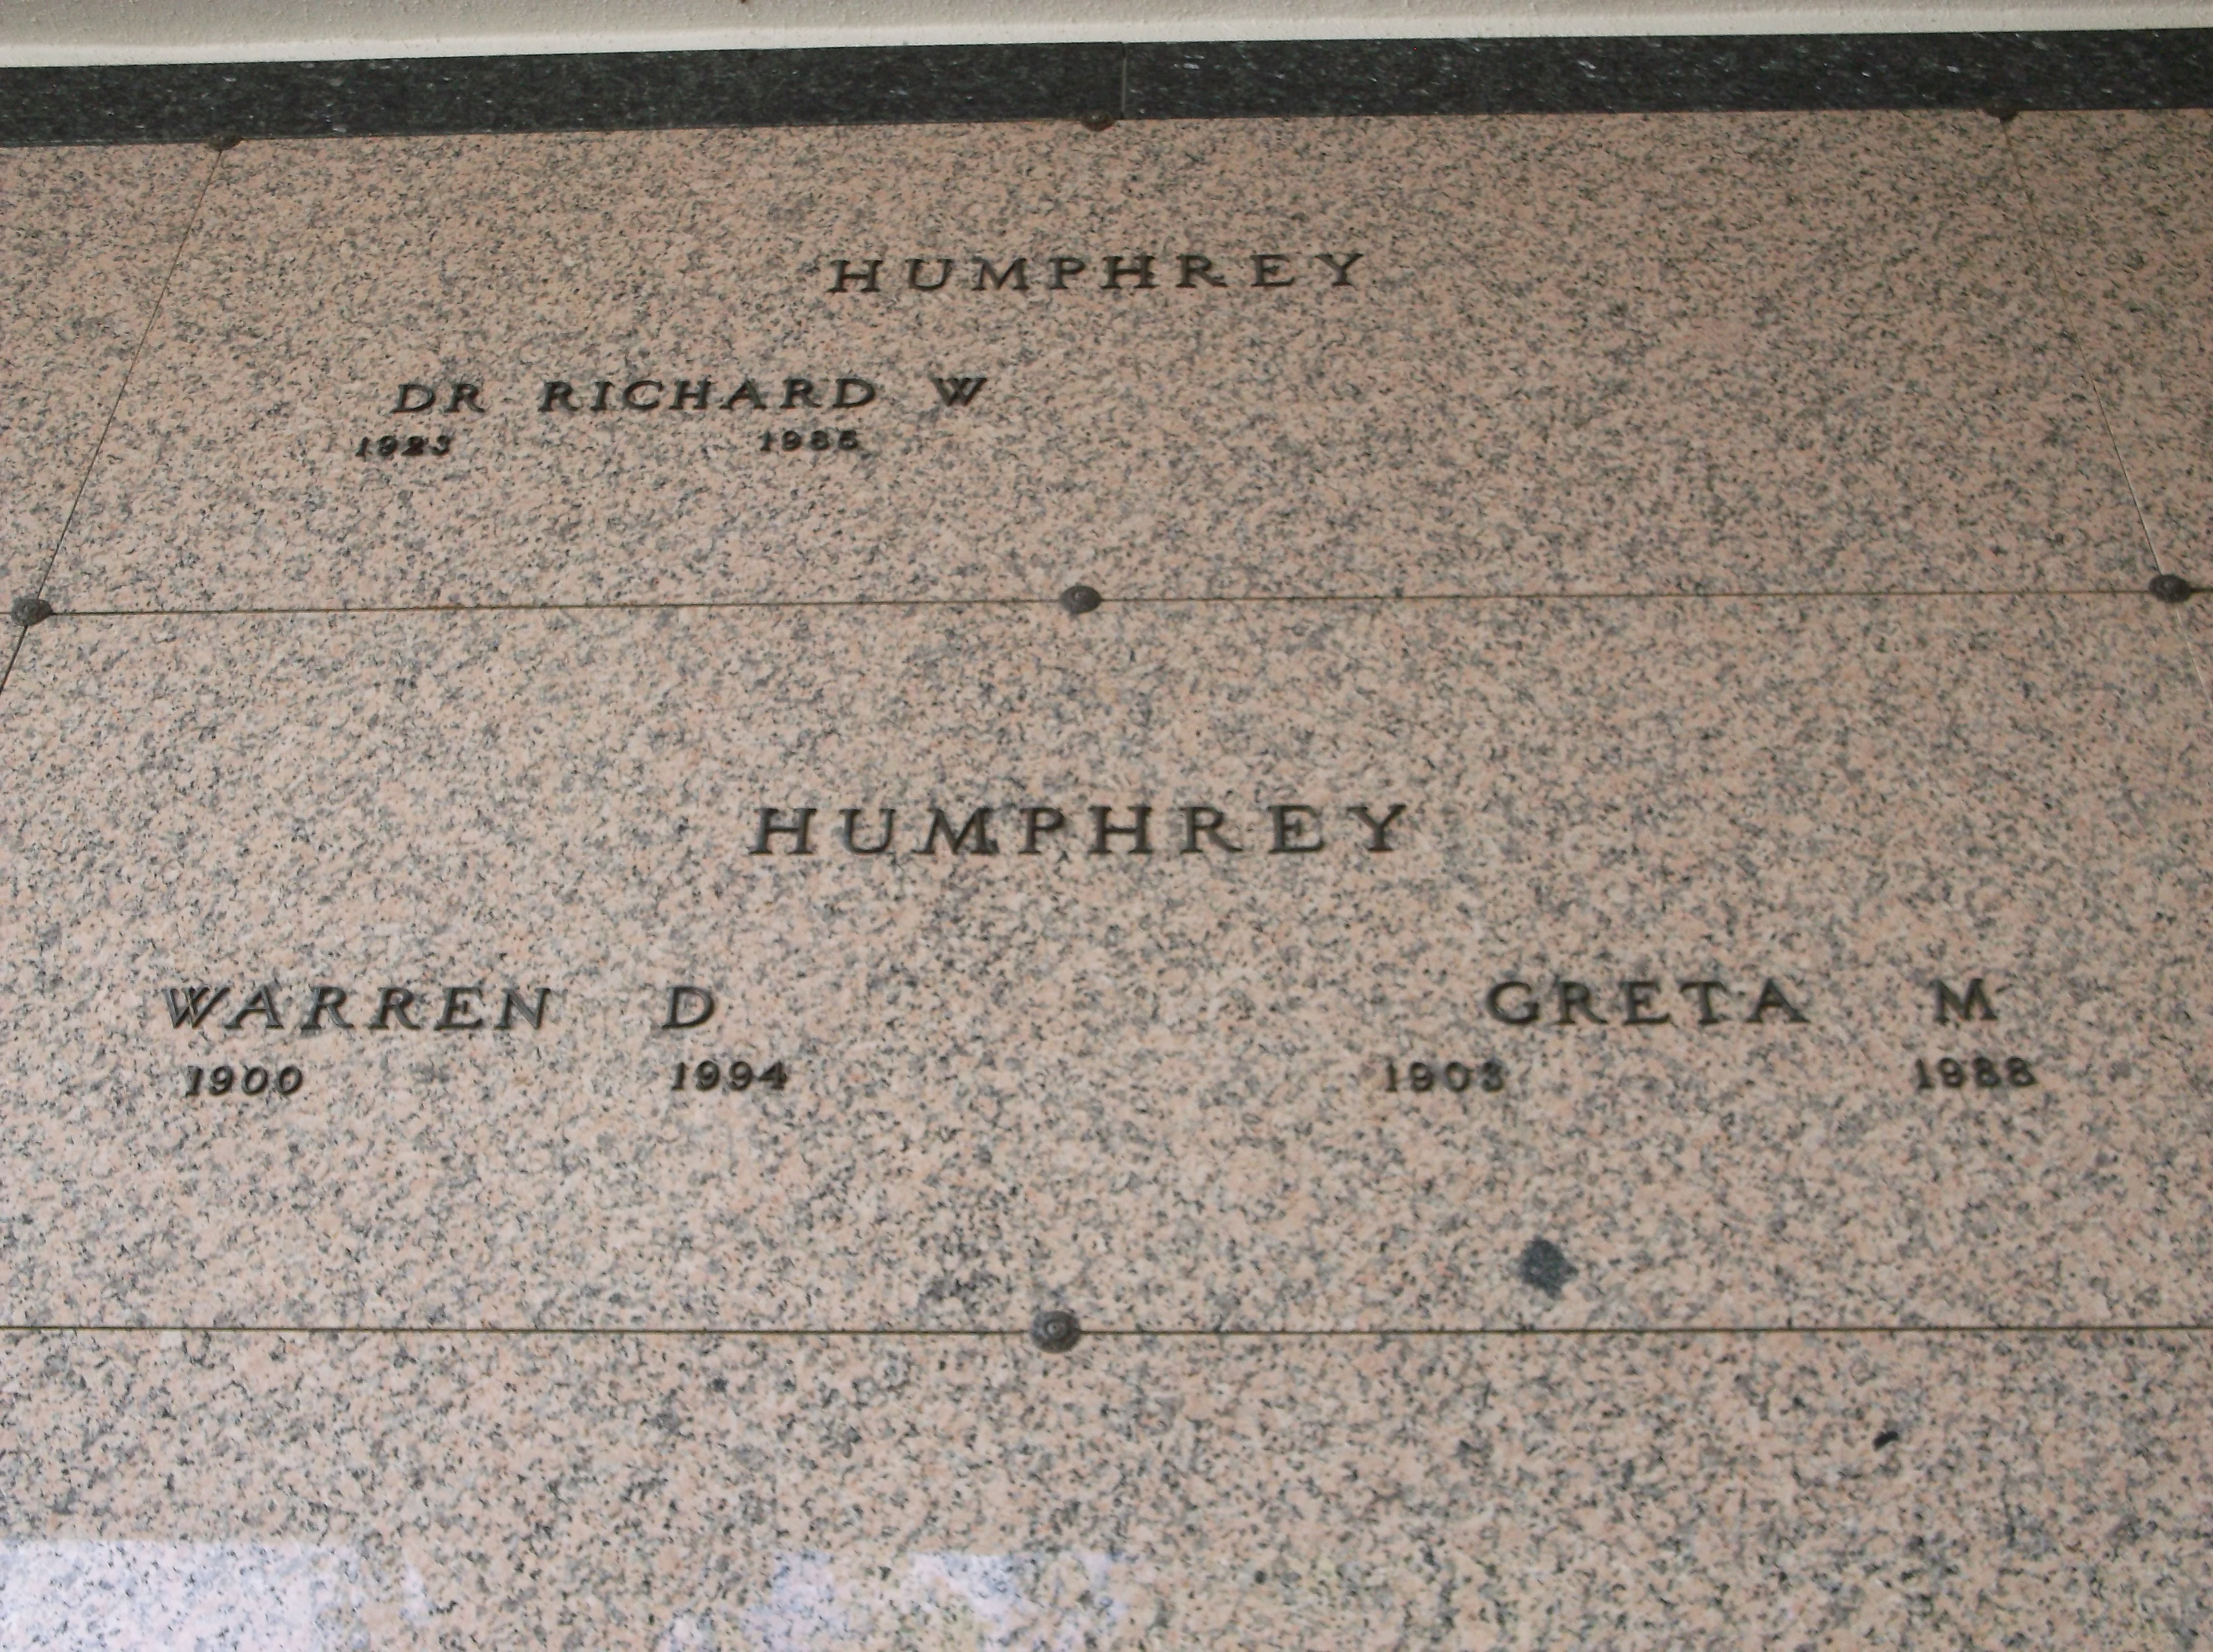 Warren D Humphrey